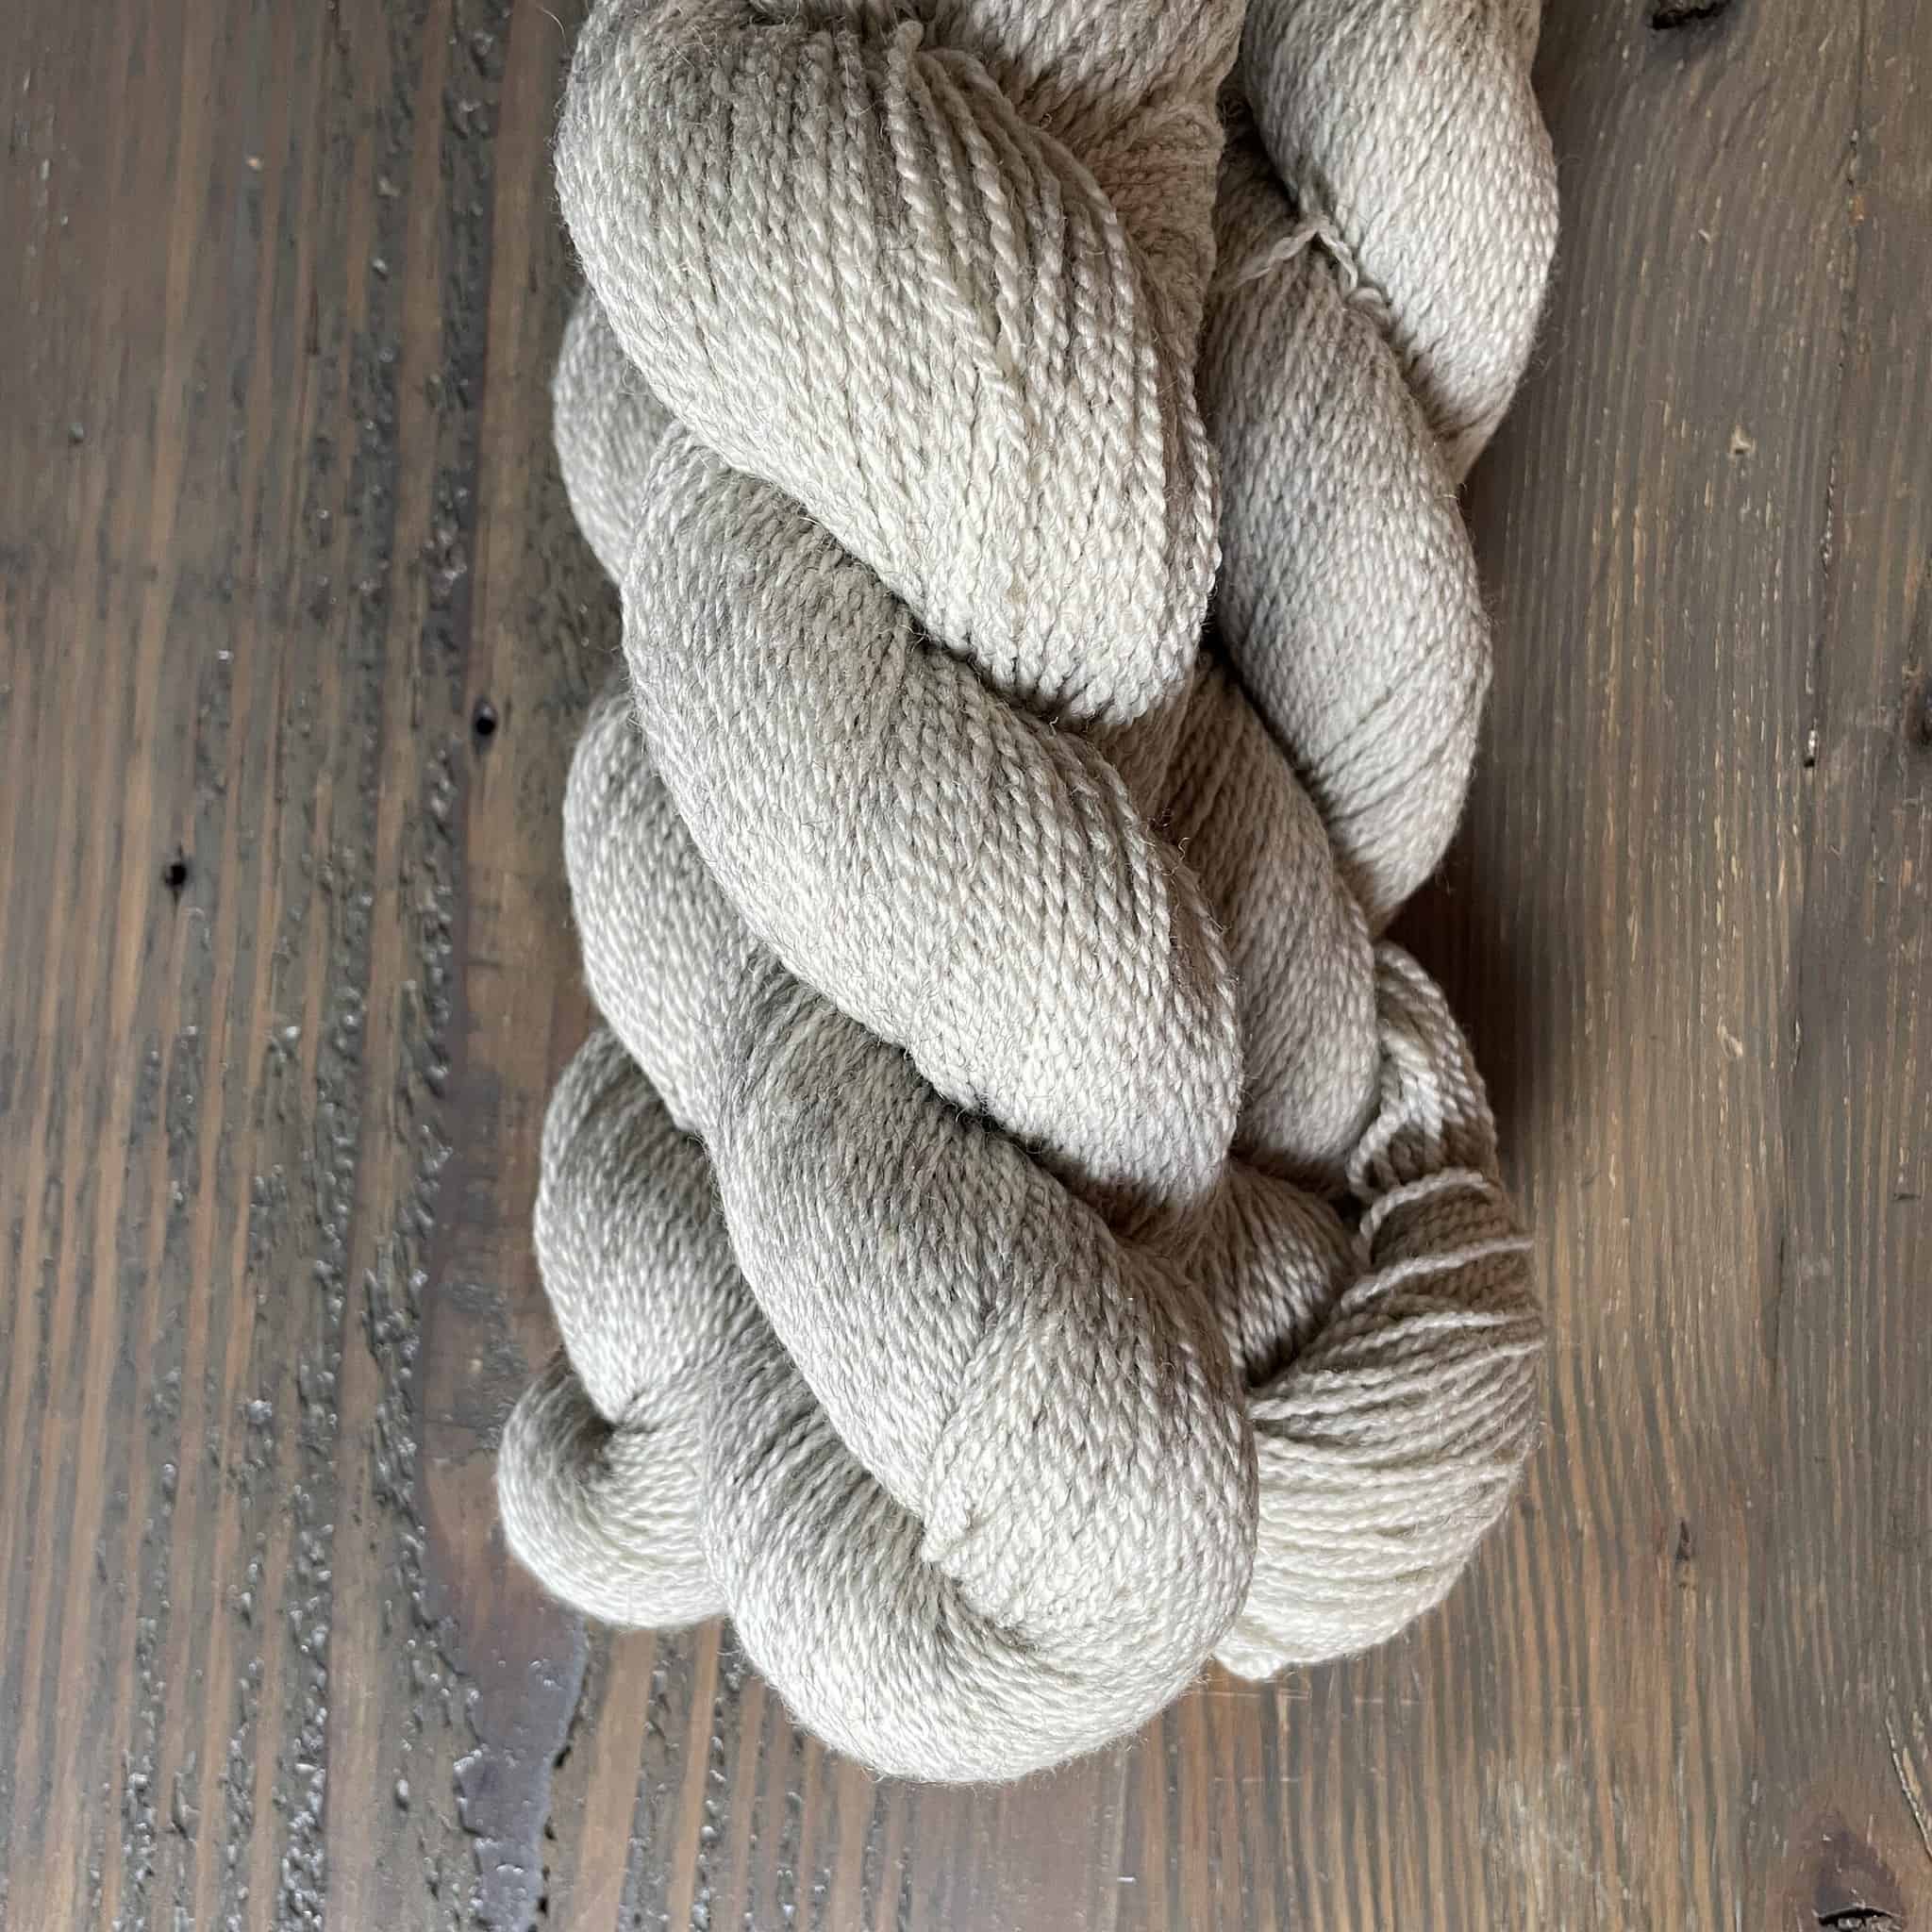 Skeins of gray yarn.